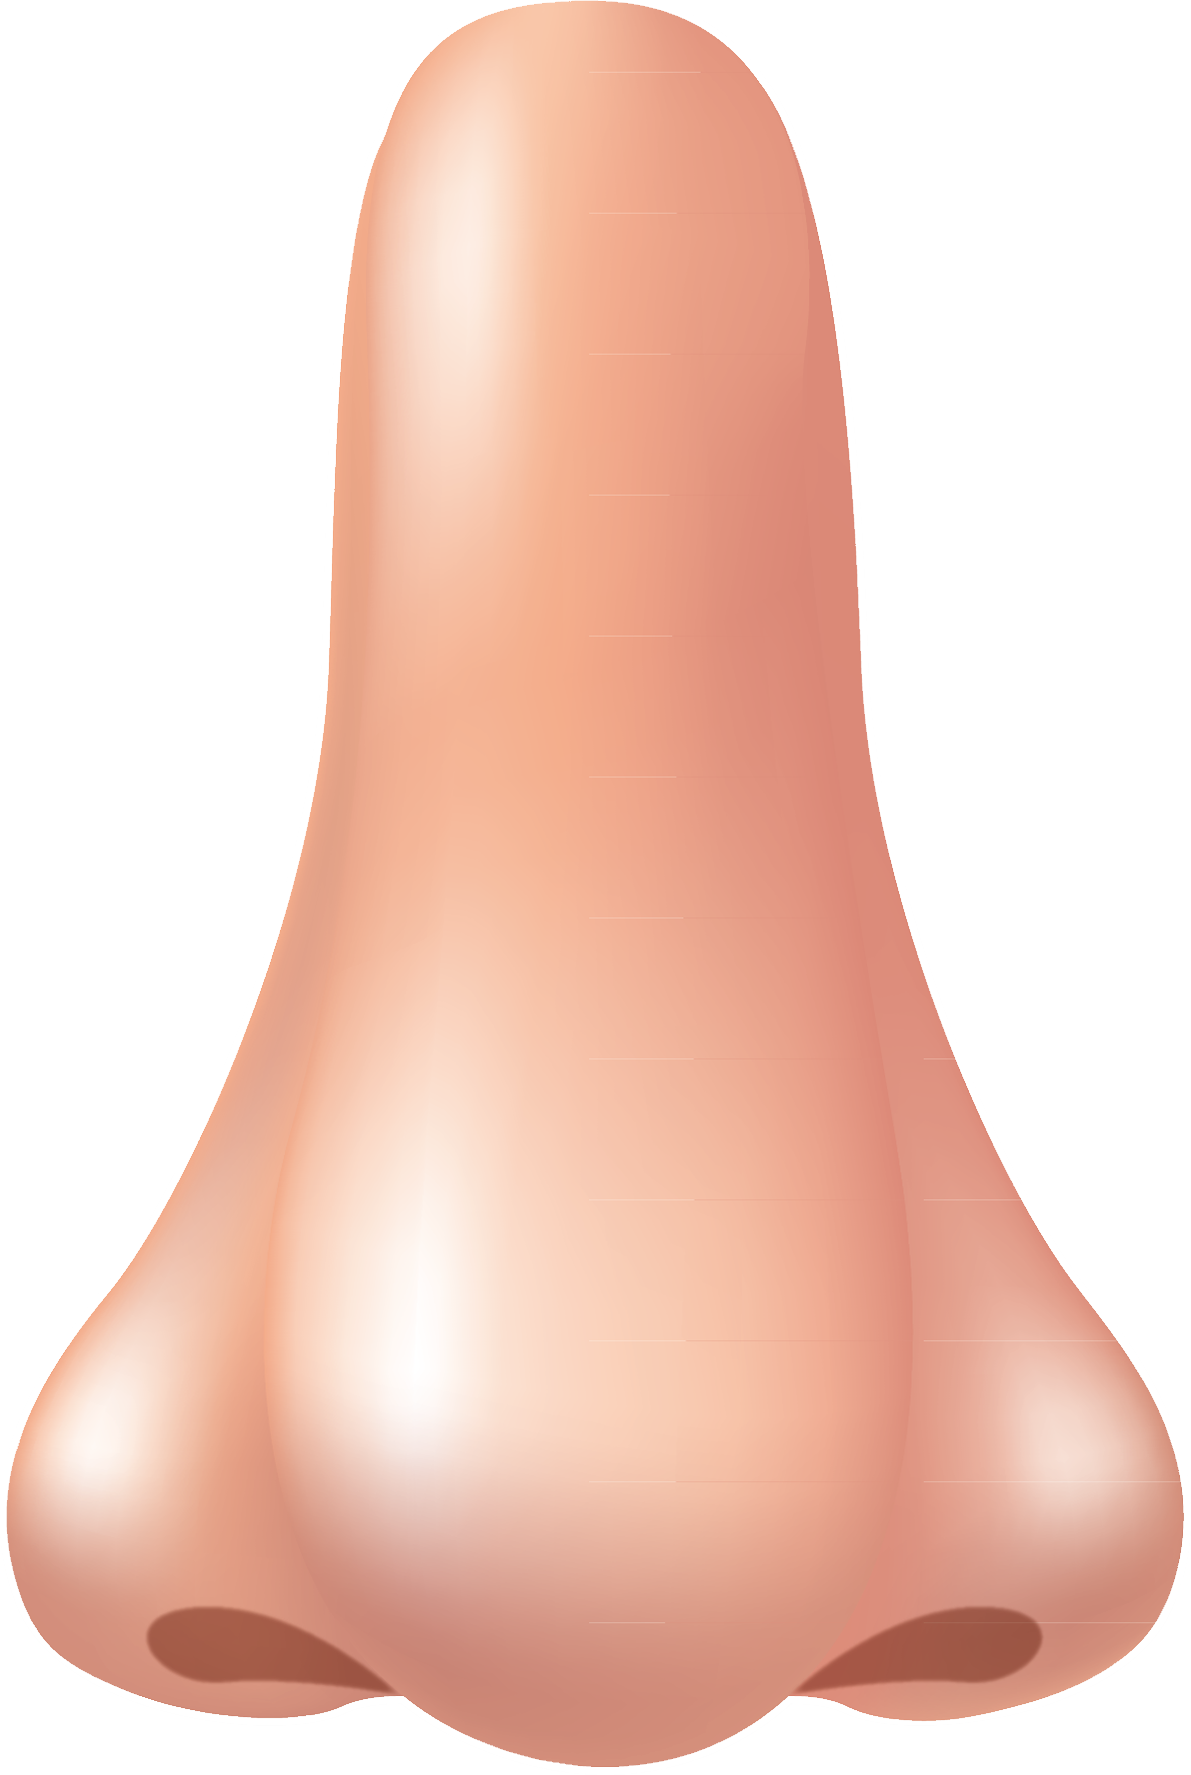 Human Nose PNG Image